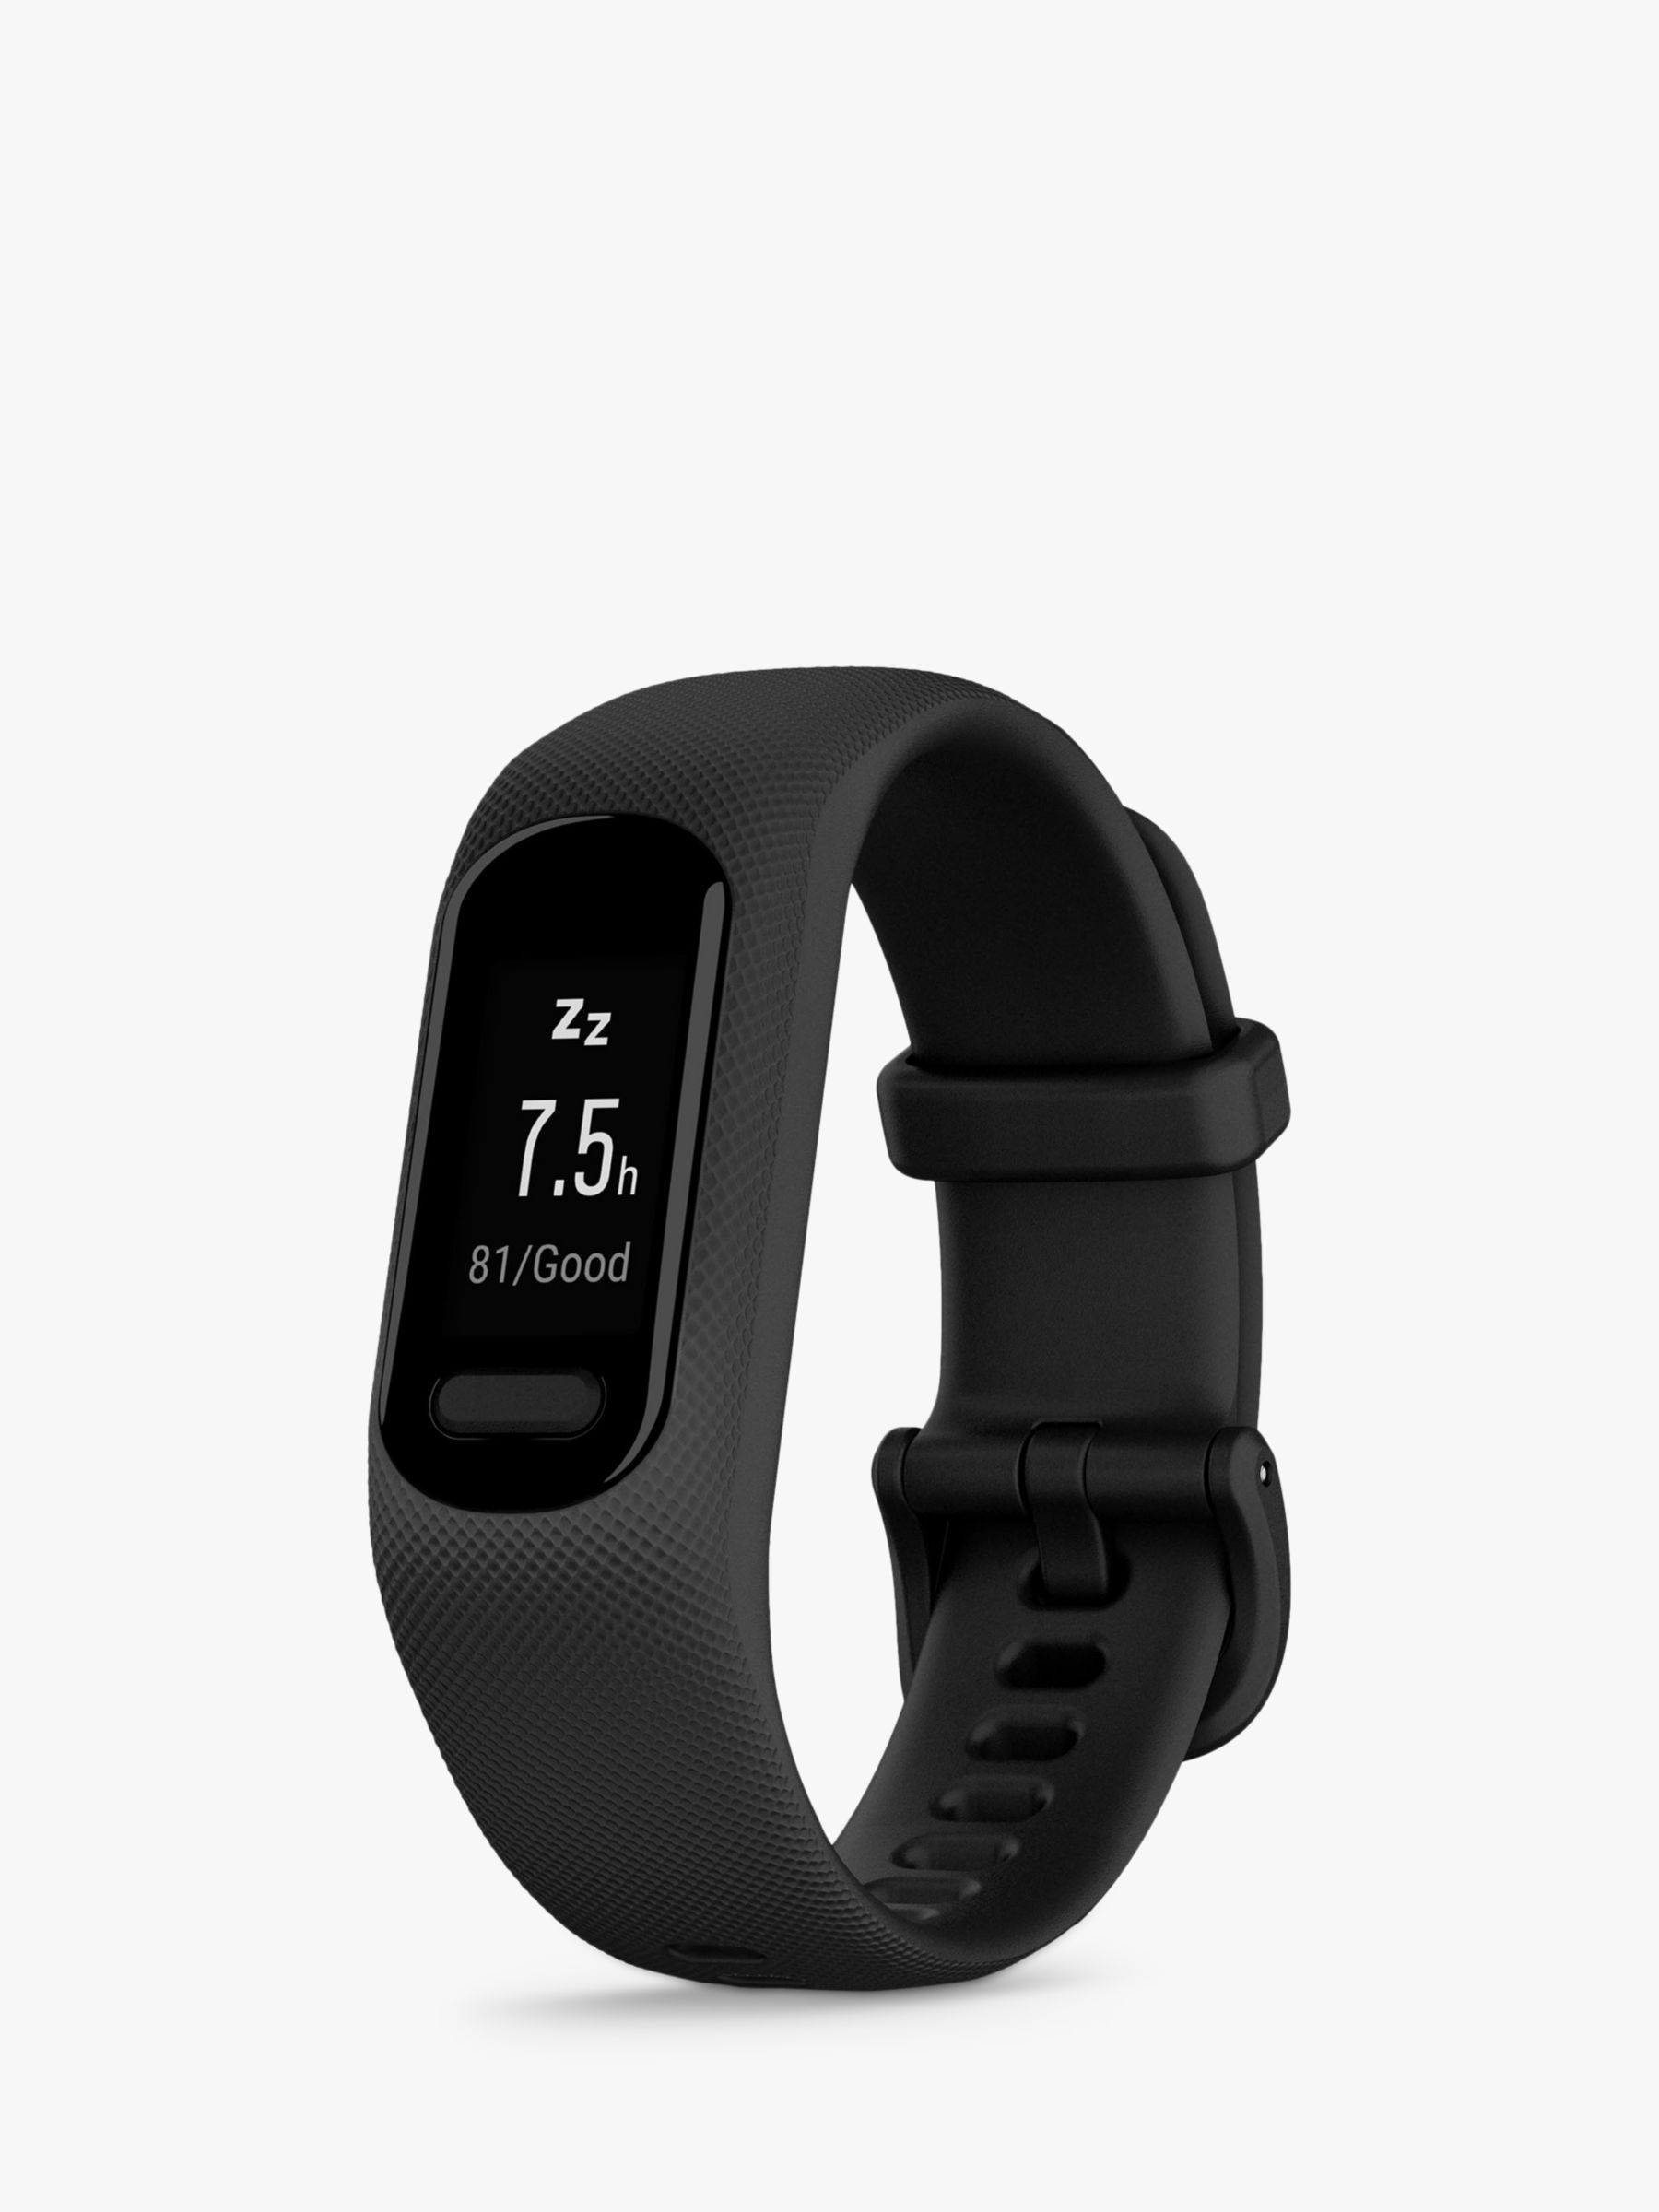 Garmin vivosmart 5 Fitness Activity Tracker with Wrist Based Heart Rate ...